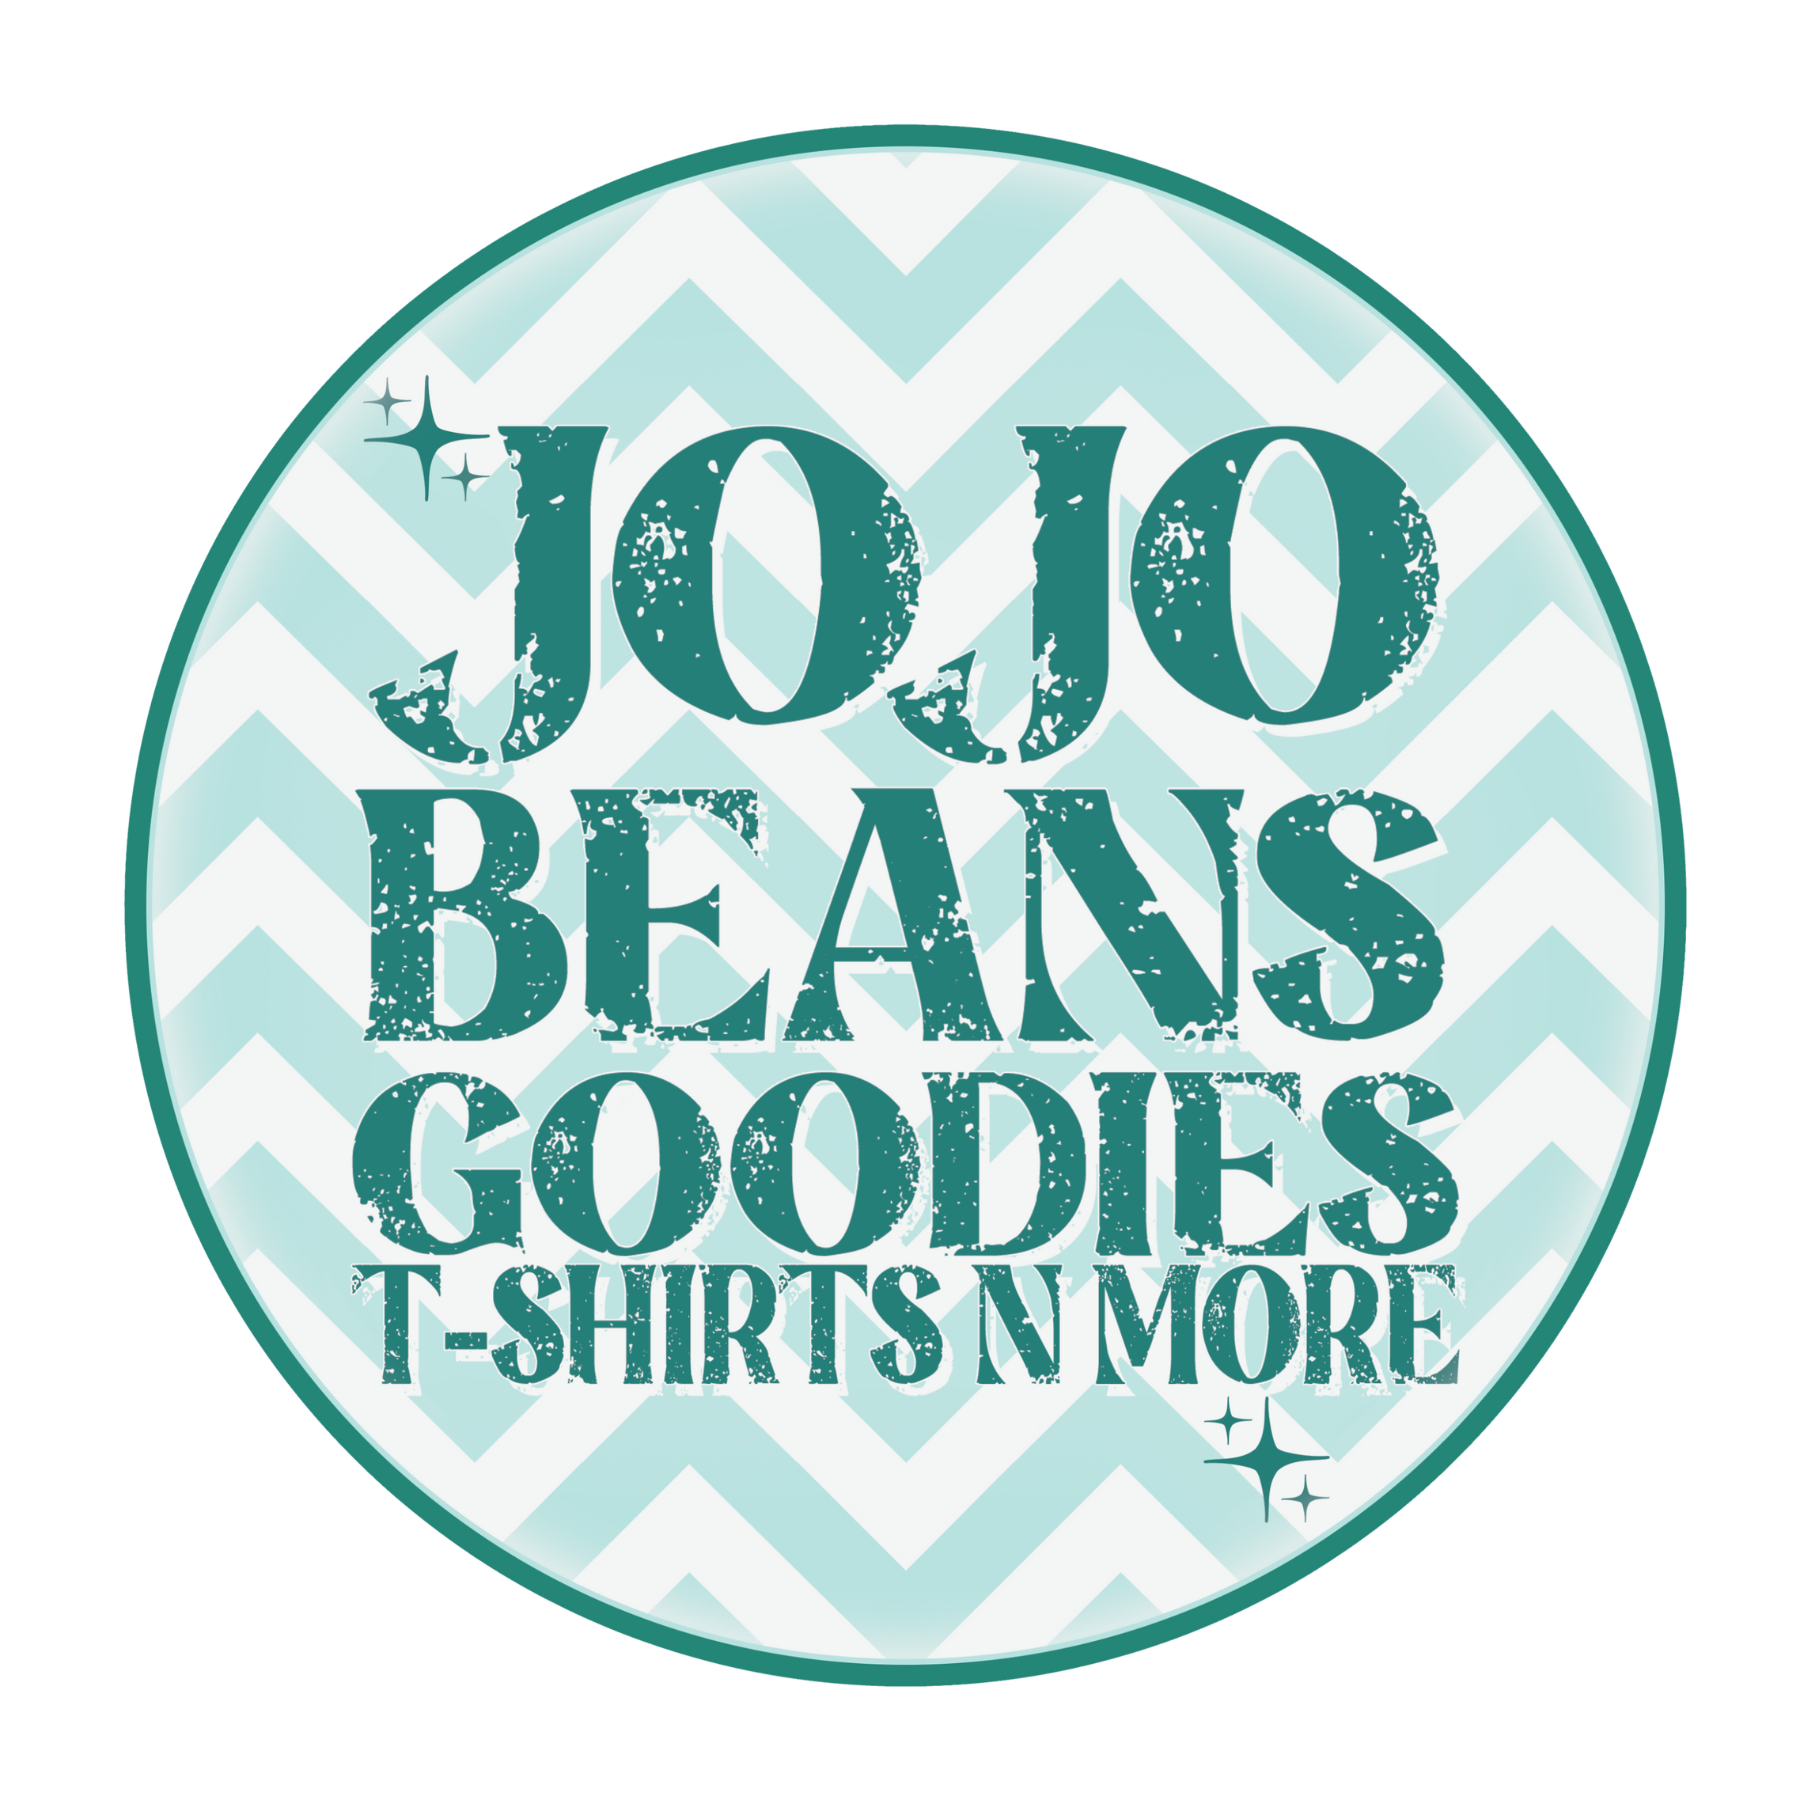 JoJoBeansGoodies T-Shirts N More